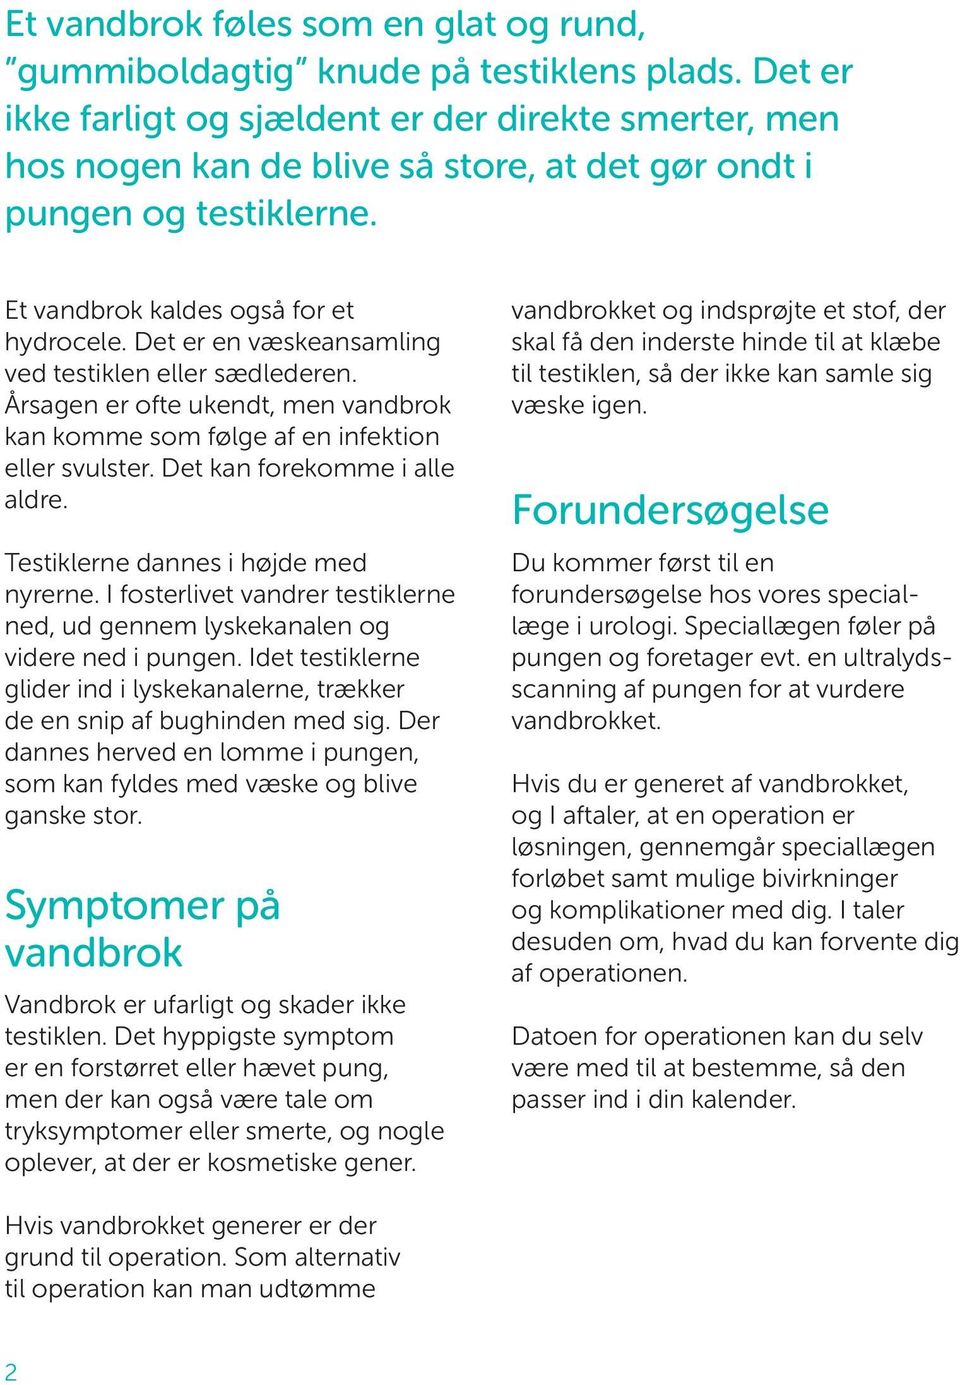 Patientvejledning. Vandbrok. Hydrocele - PDF Gratis download